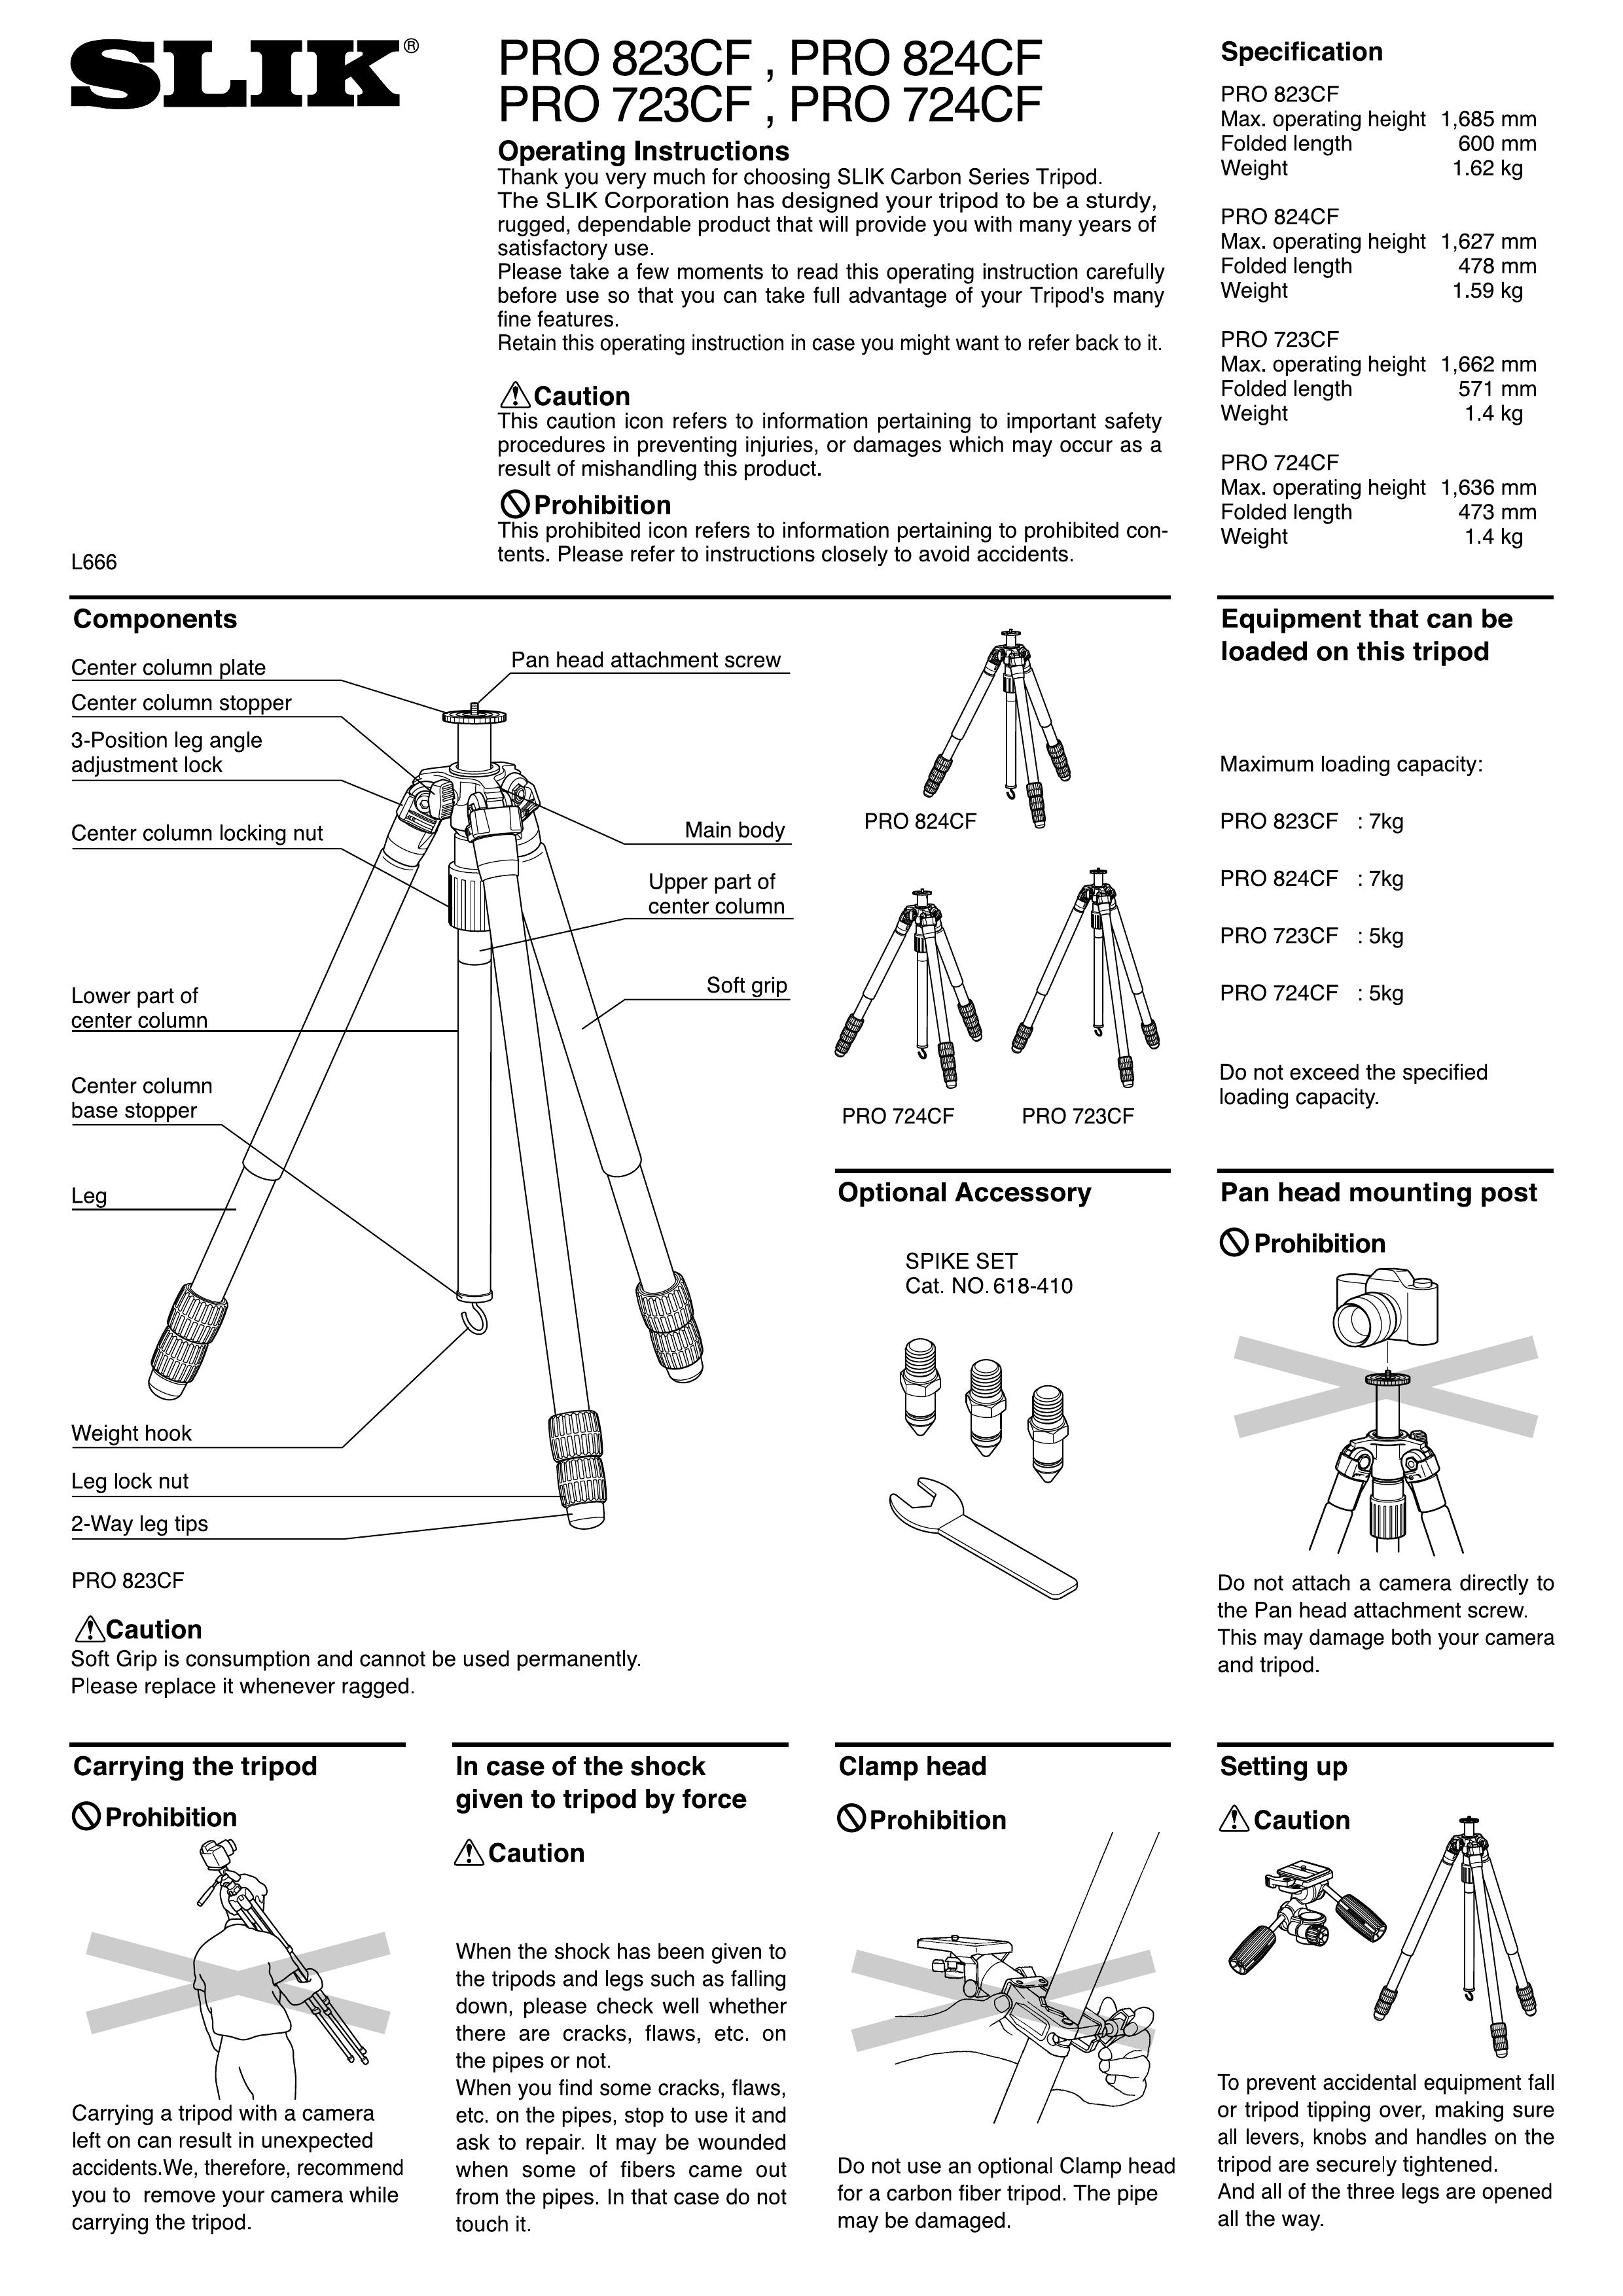 SLIK pro824cf Camcorder Accessories User Manual